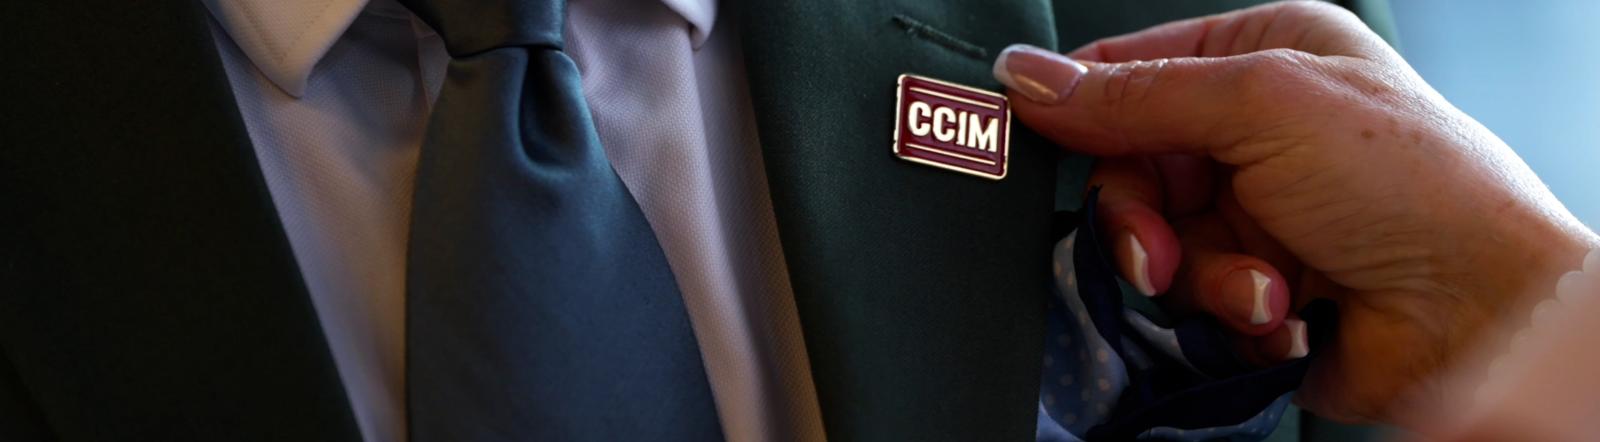 Woman pinning CCIM Designation Pin on Man's Lapel